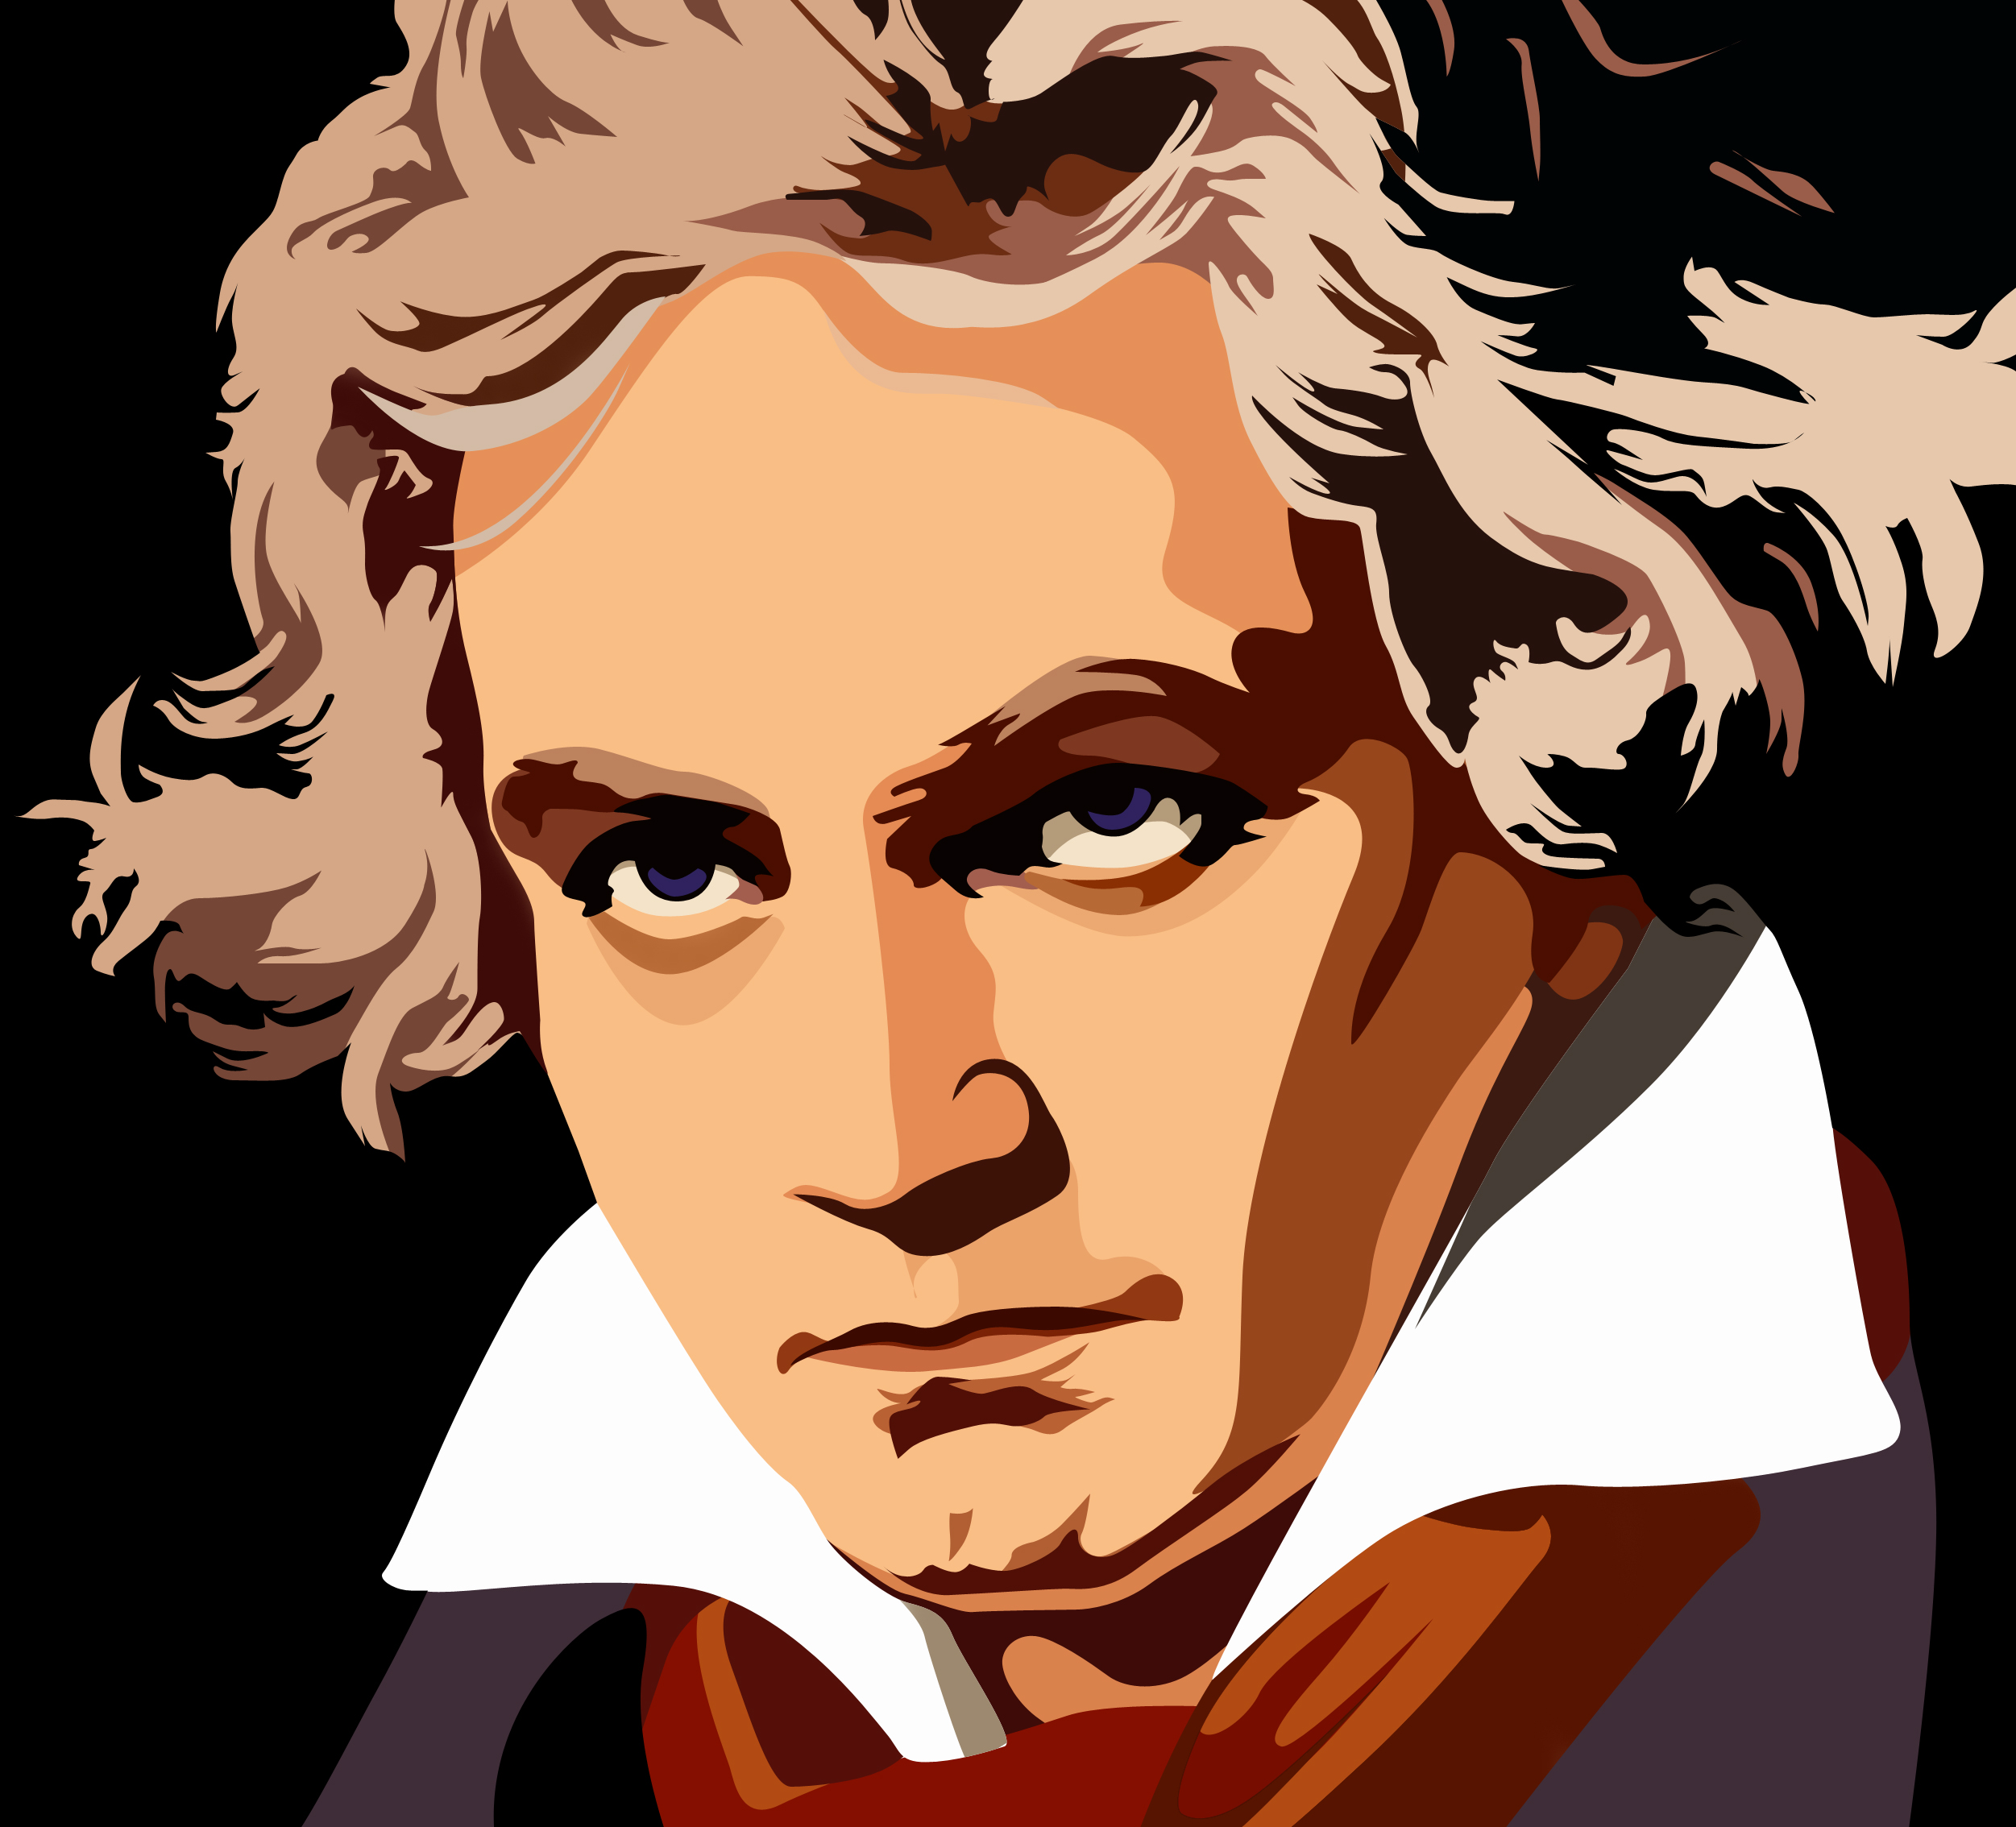 Beethoven Portrait Artwork High Resolution Cdh